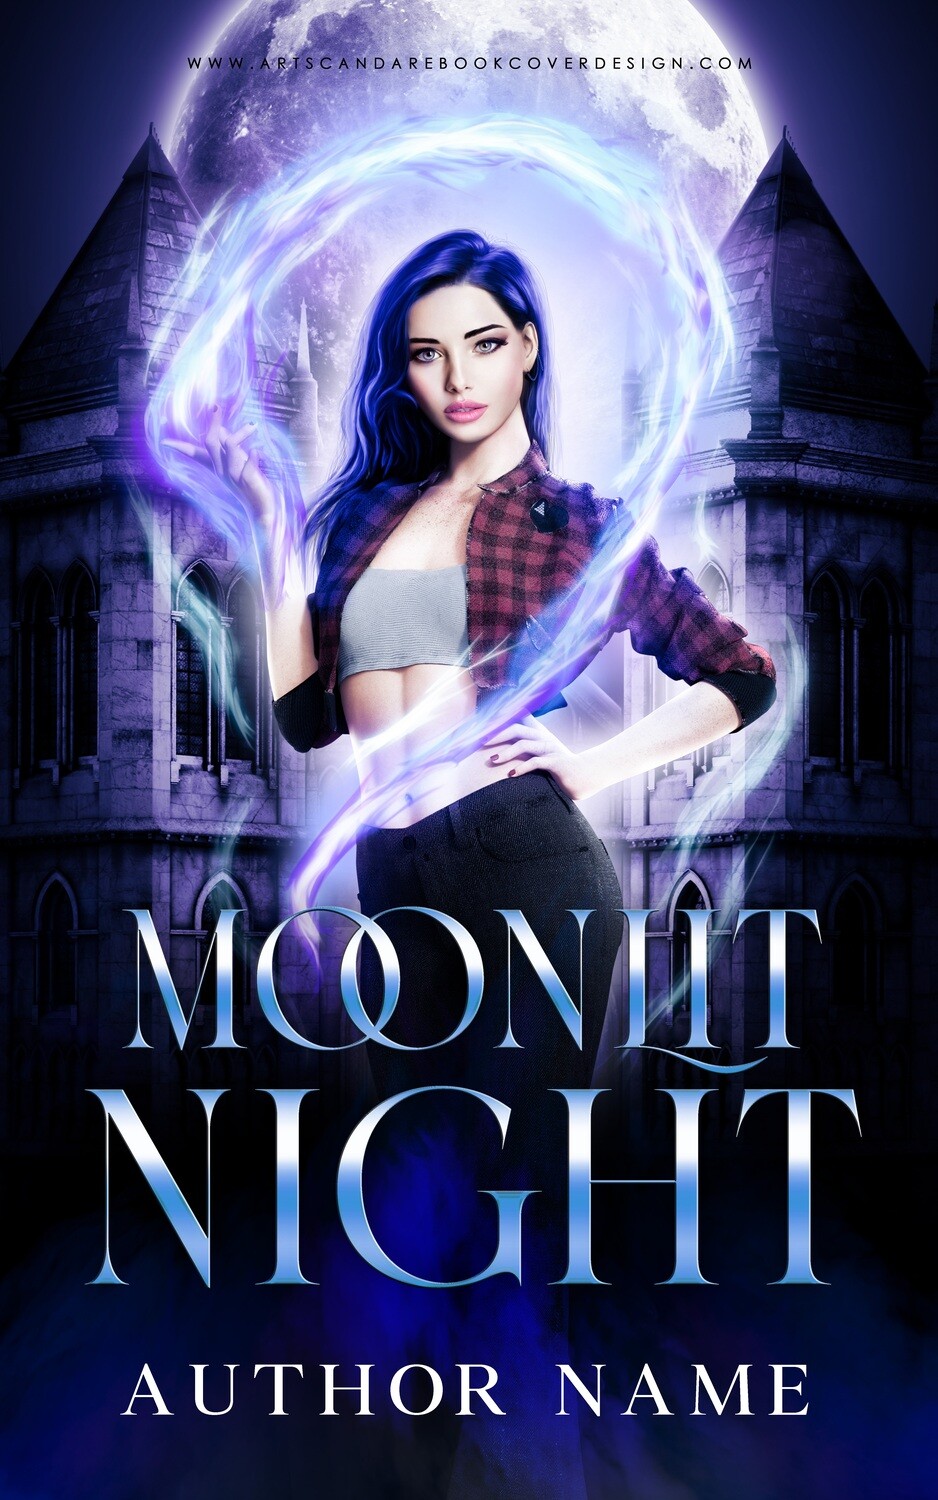 Ebook: Moonlit Night